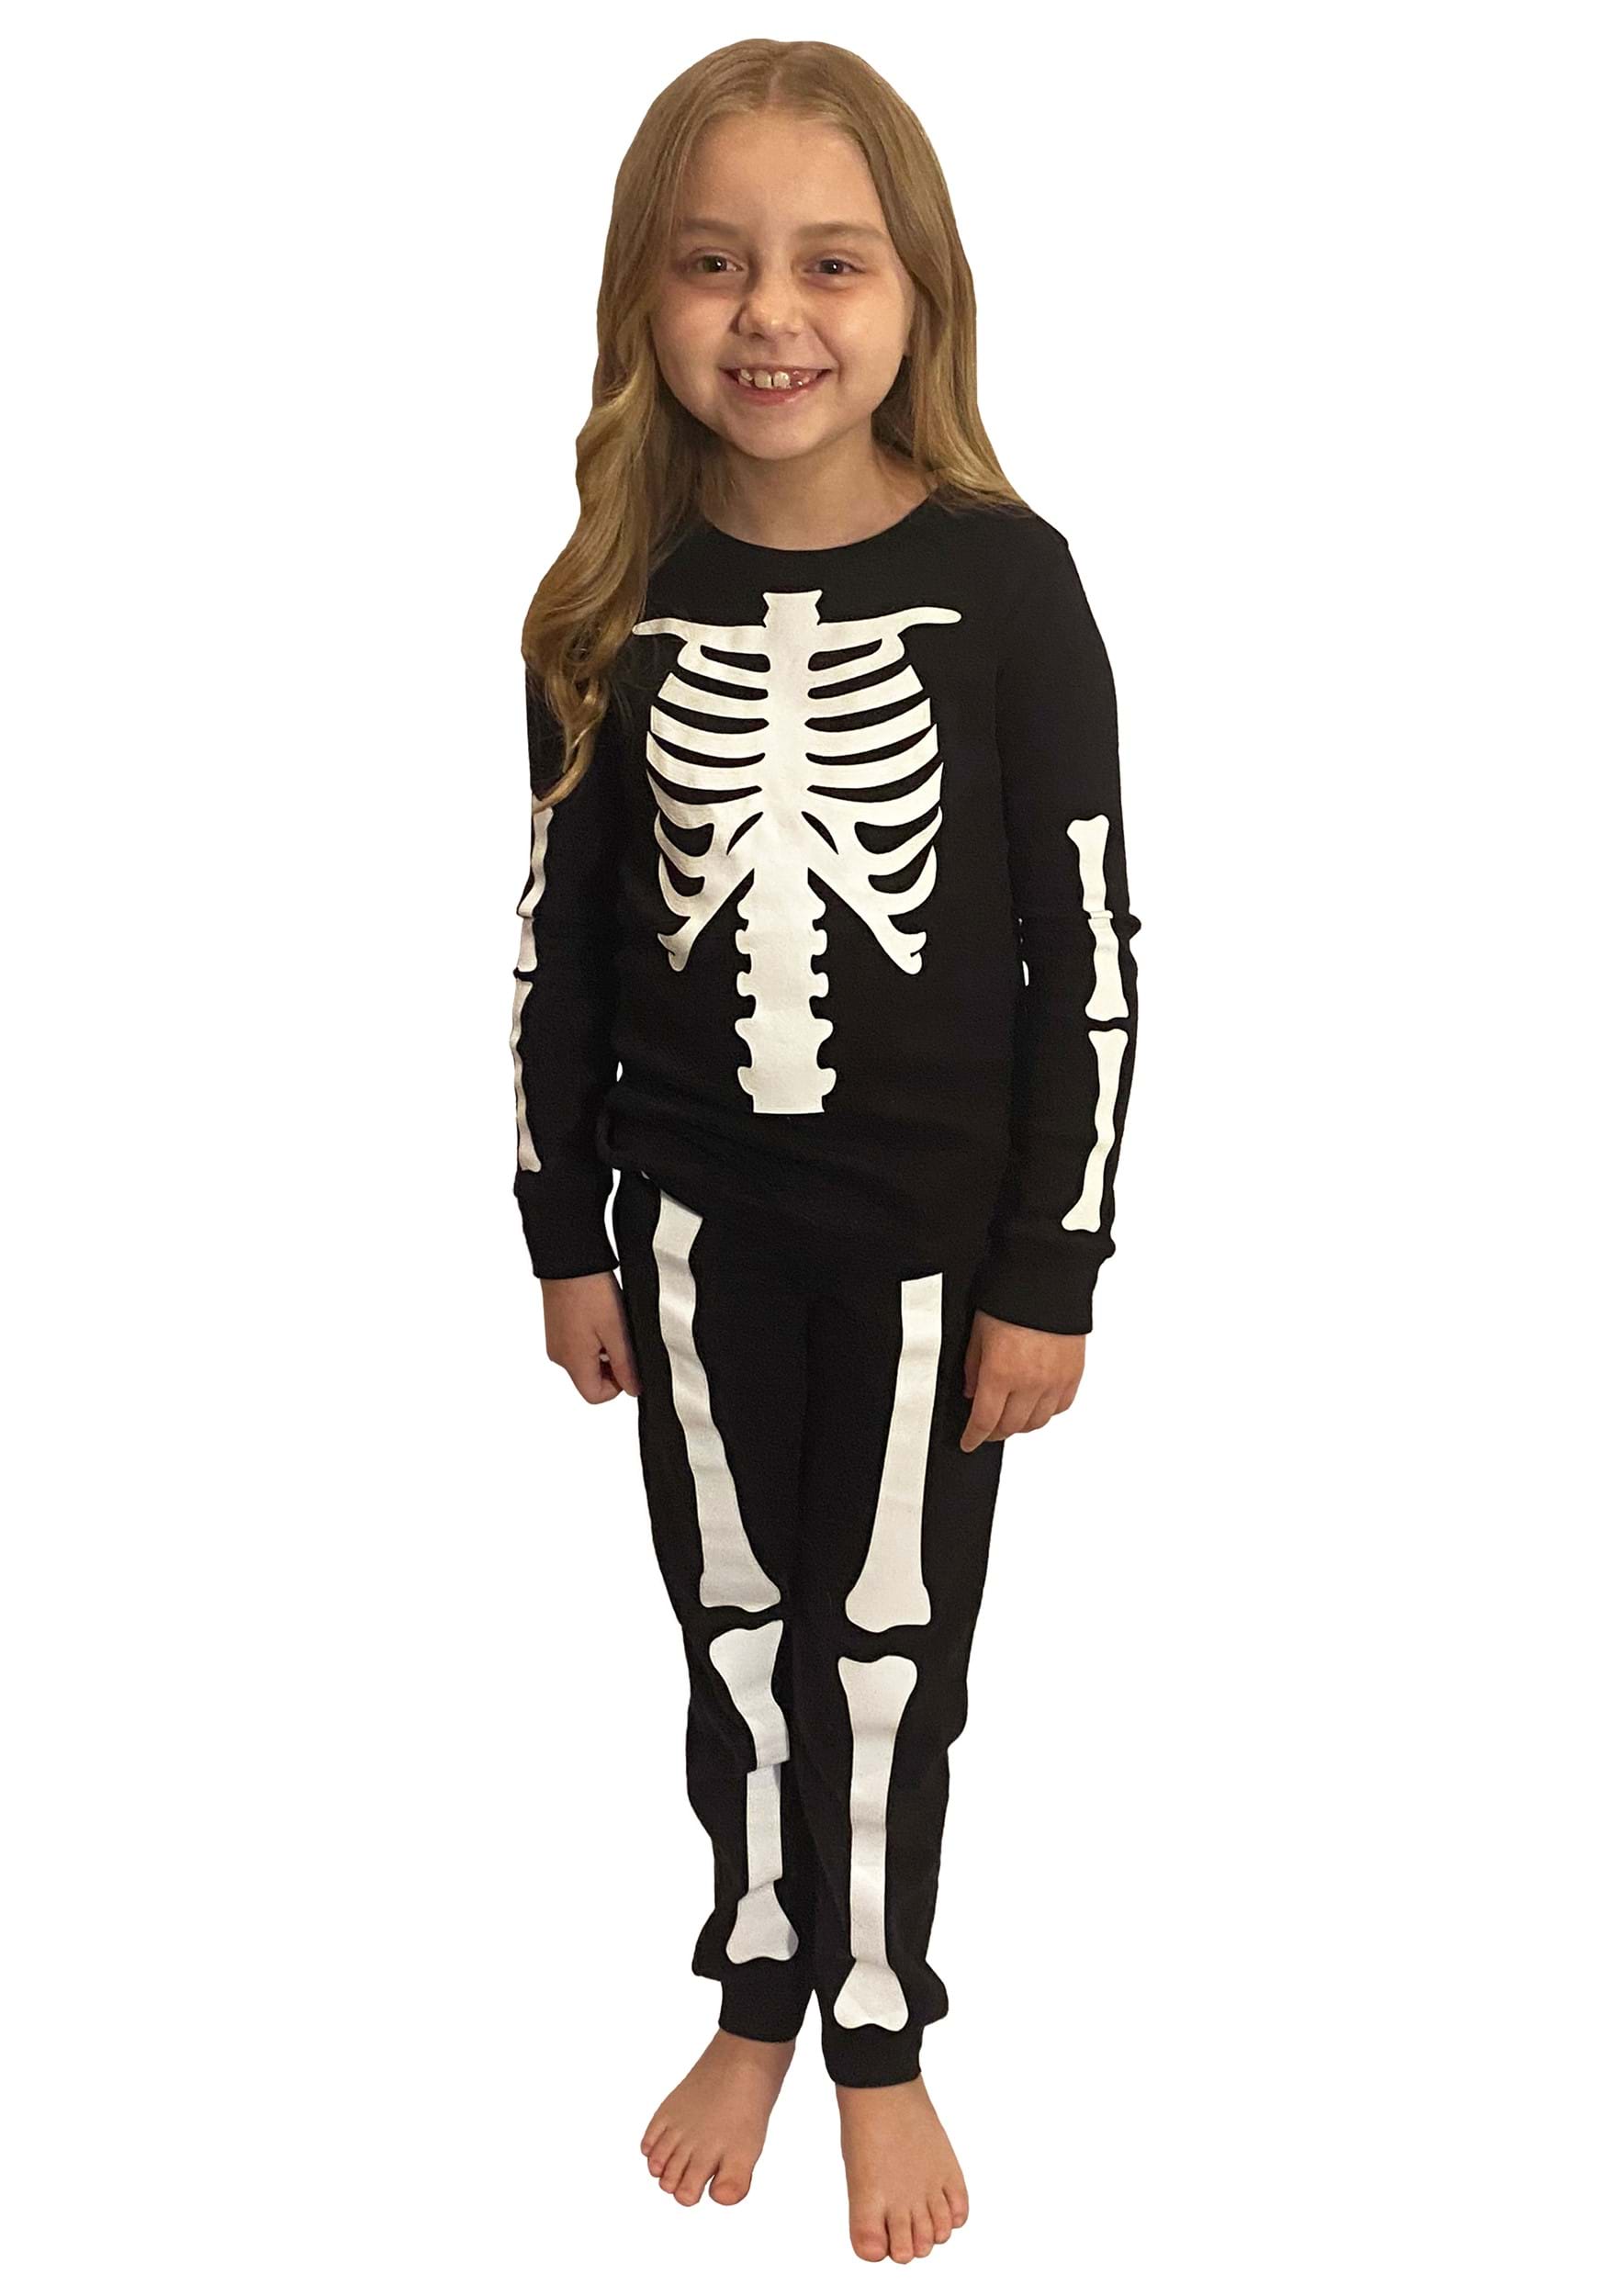 2 Piece Kids Skeleton Jogger Sleep Set | Skeleton Costumes